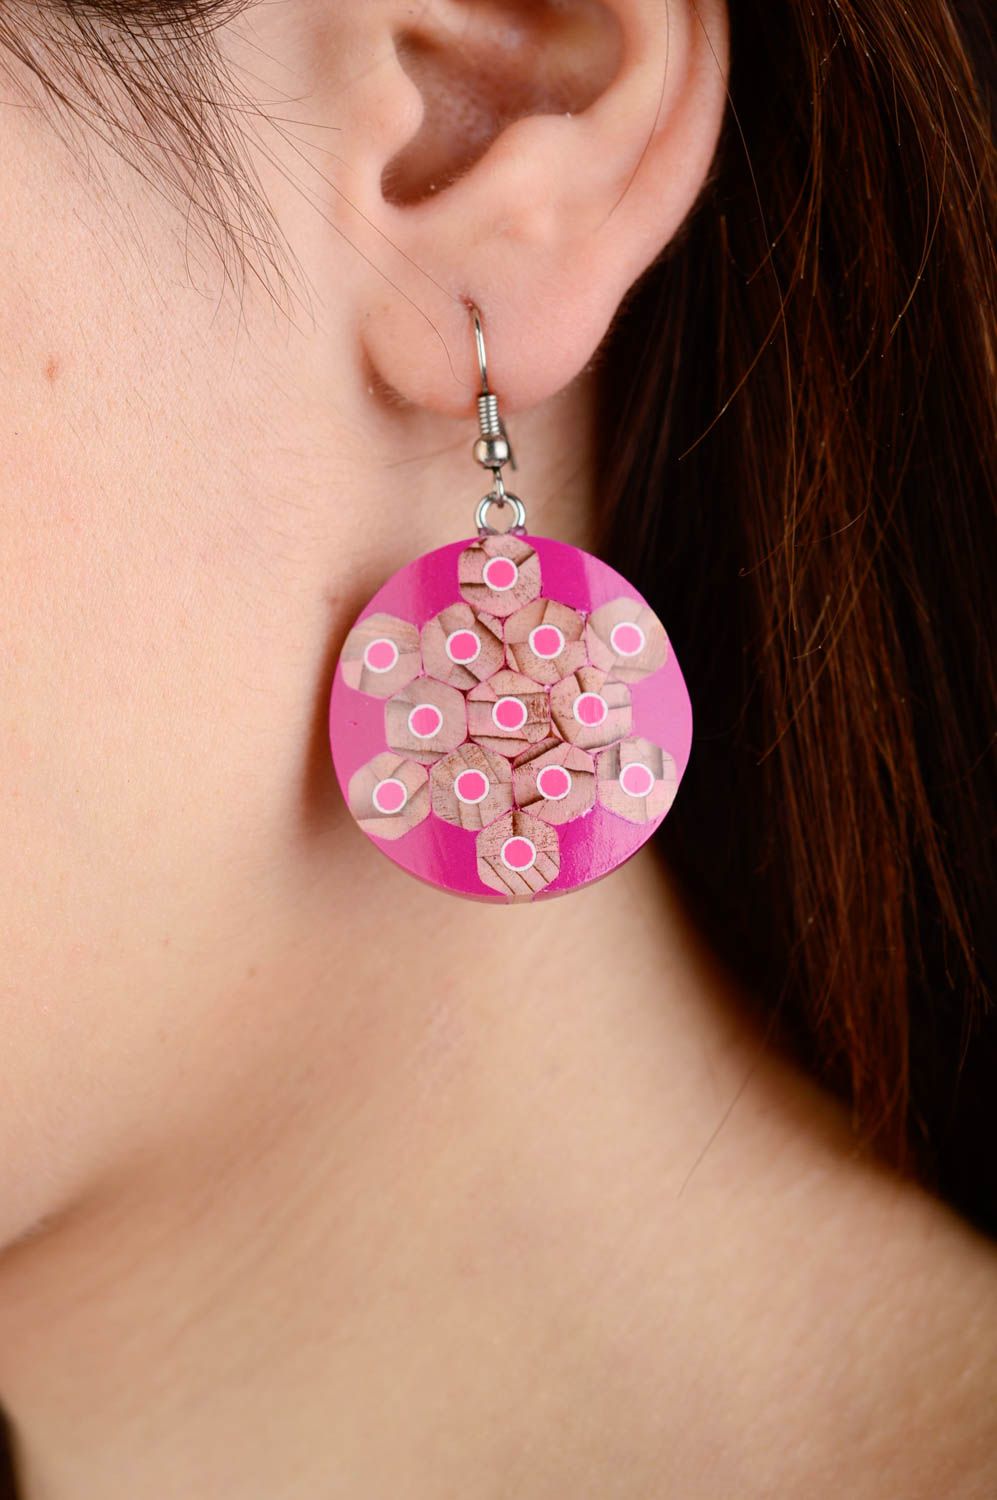 Wood earrings handmade jewelry fashion accessories dangling earrings cool gifts photo 2